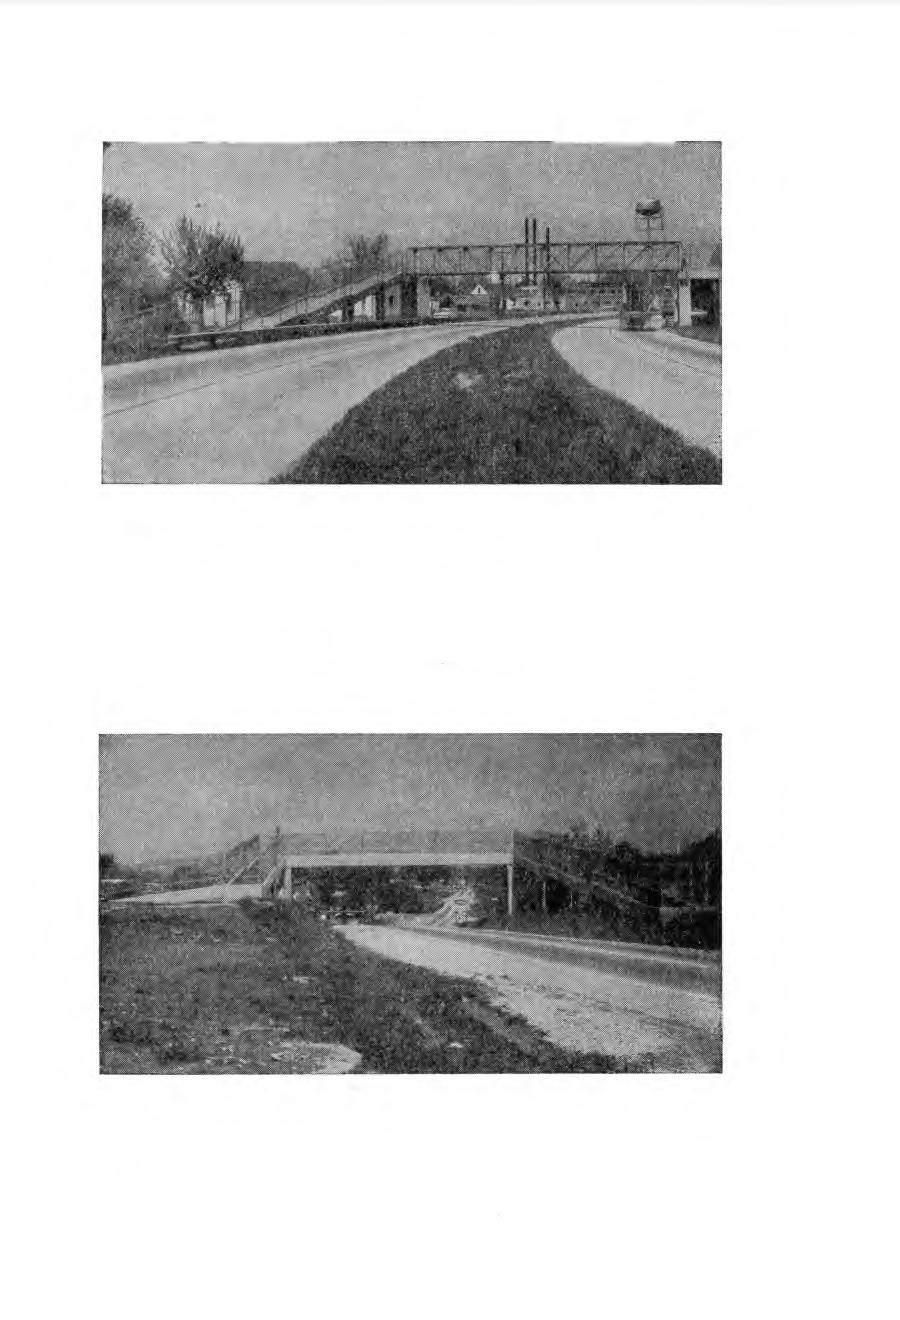 214 Fig. 14. Overpass school crossing at Clarksville.